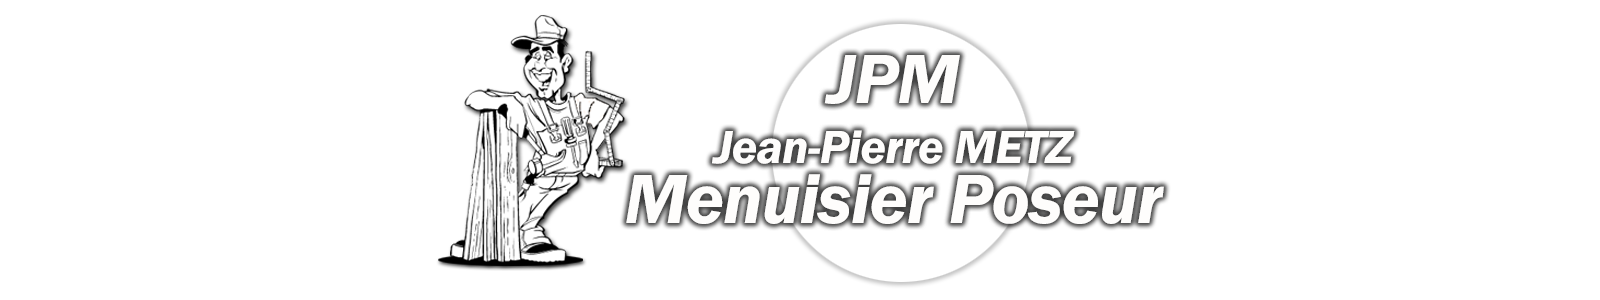 JPM Menuisier Poseur